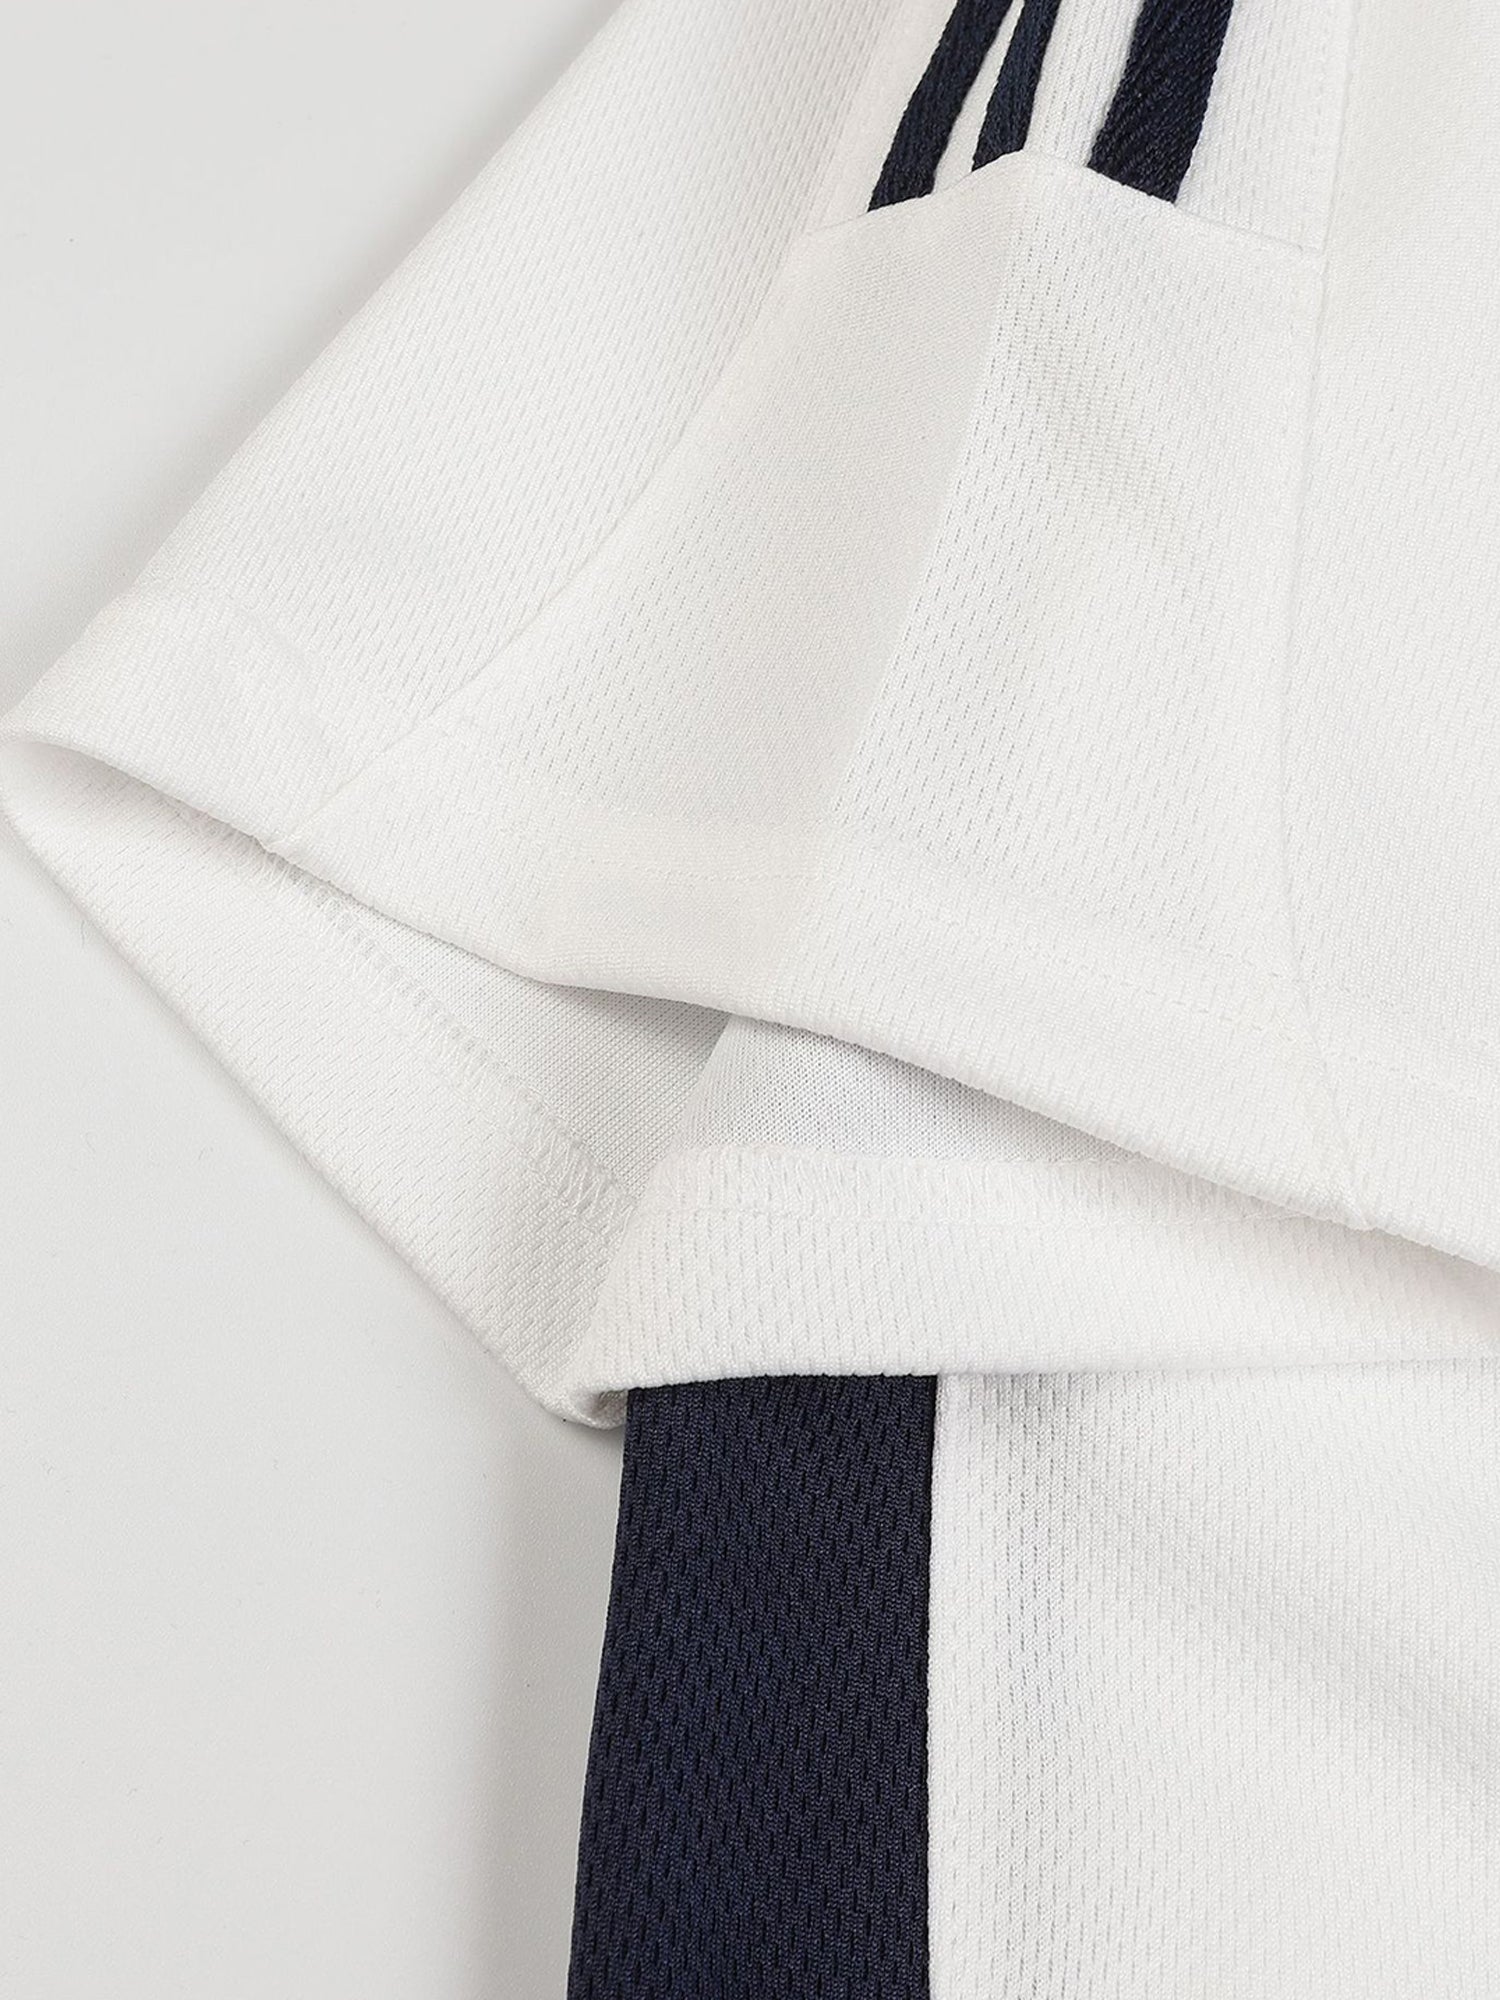 Thesupermade American Street Fashion Polo Short Sleeve T-Shirt